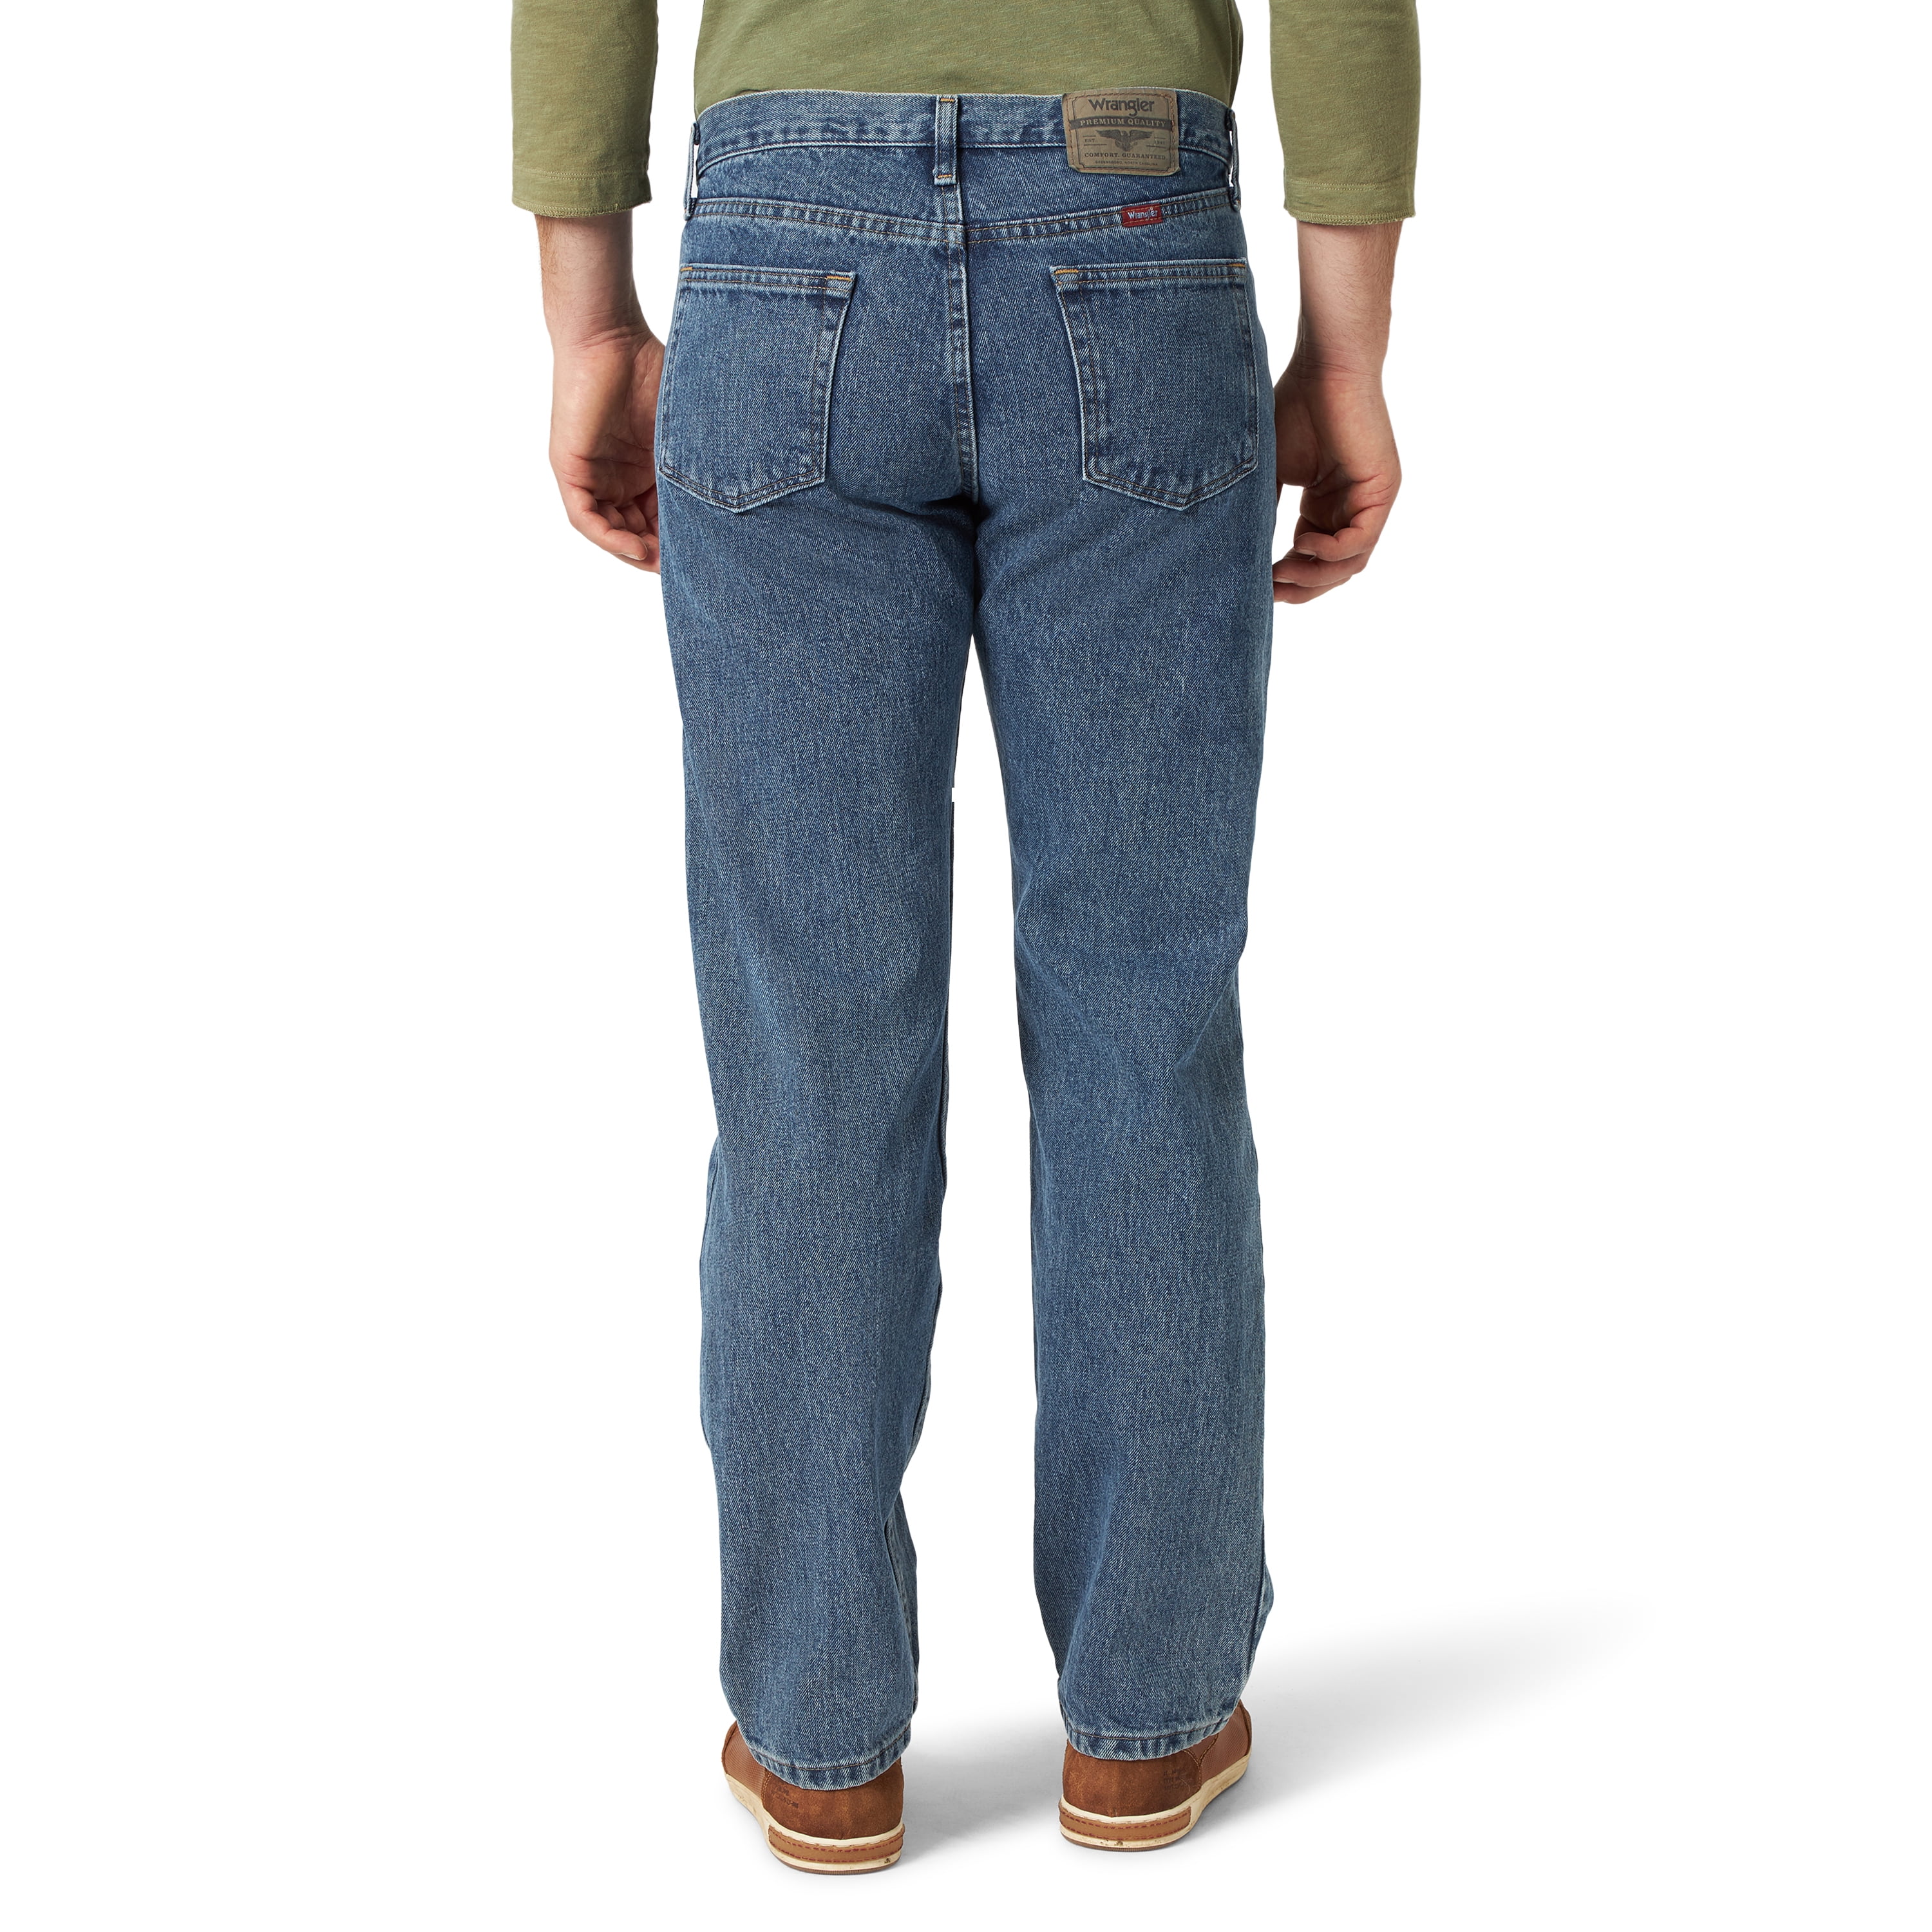 wrangler jeans 46 x 30